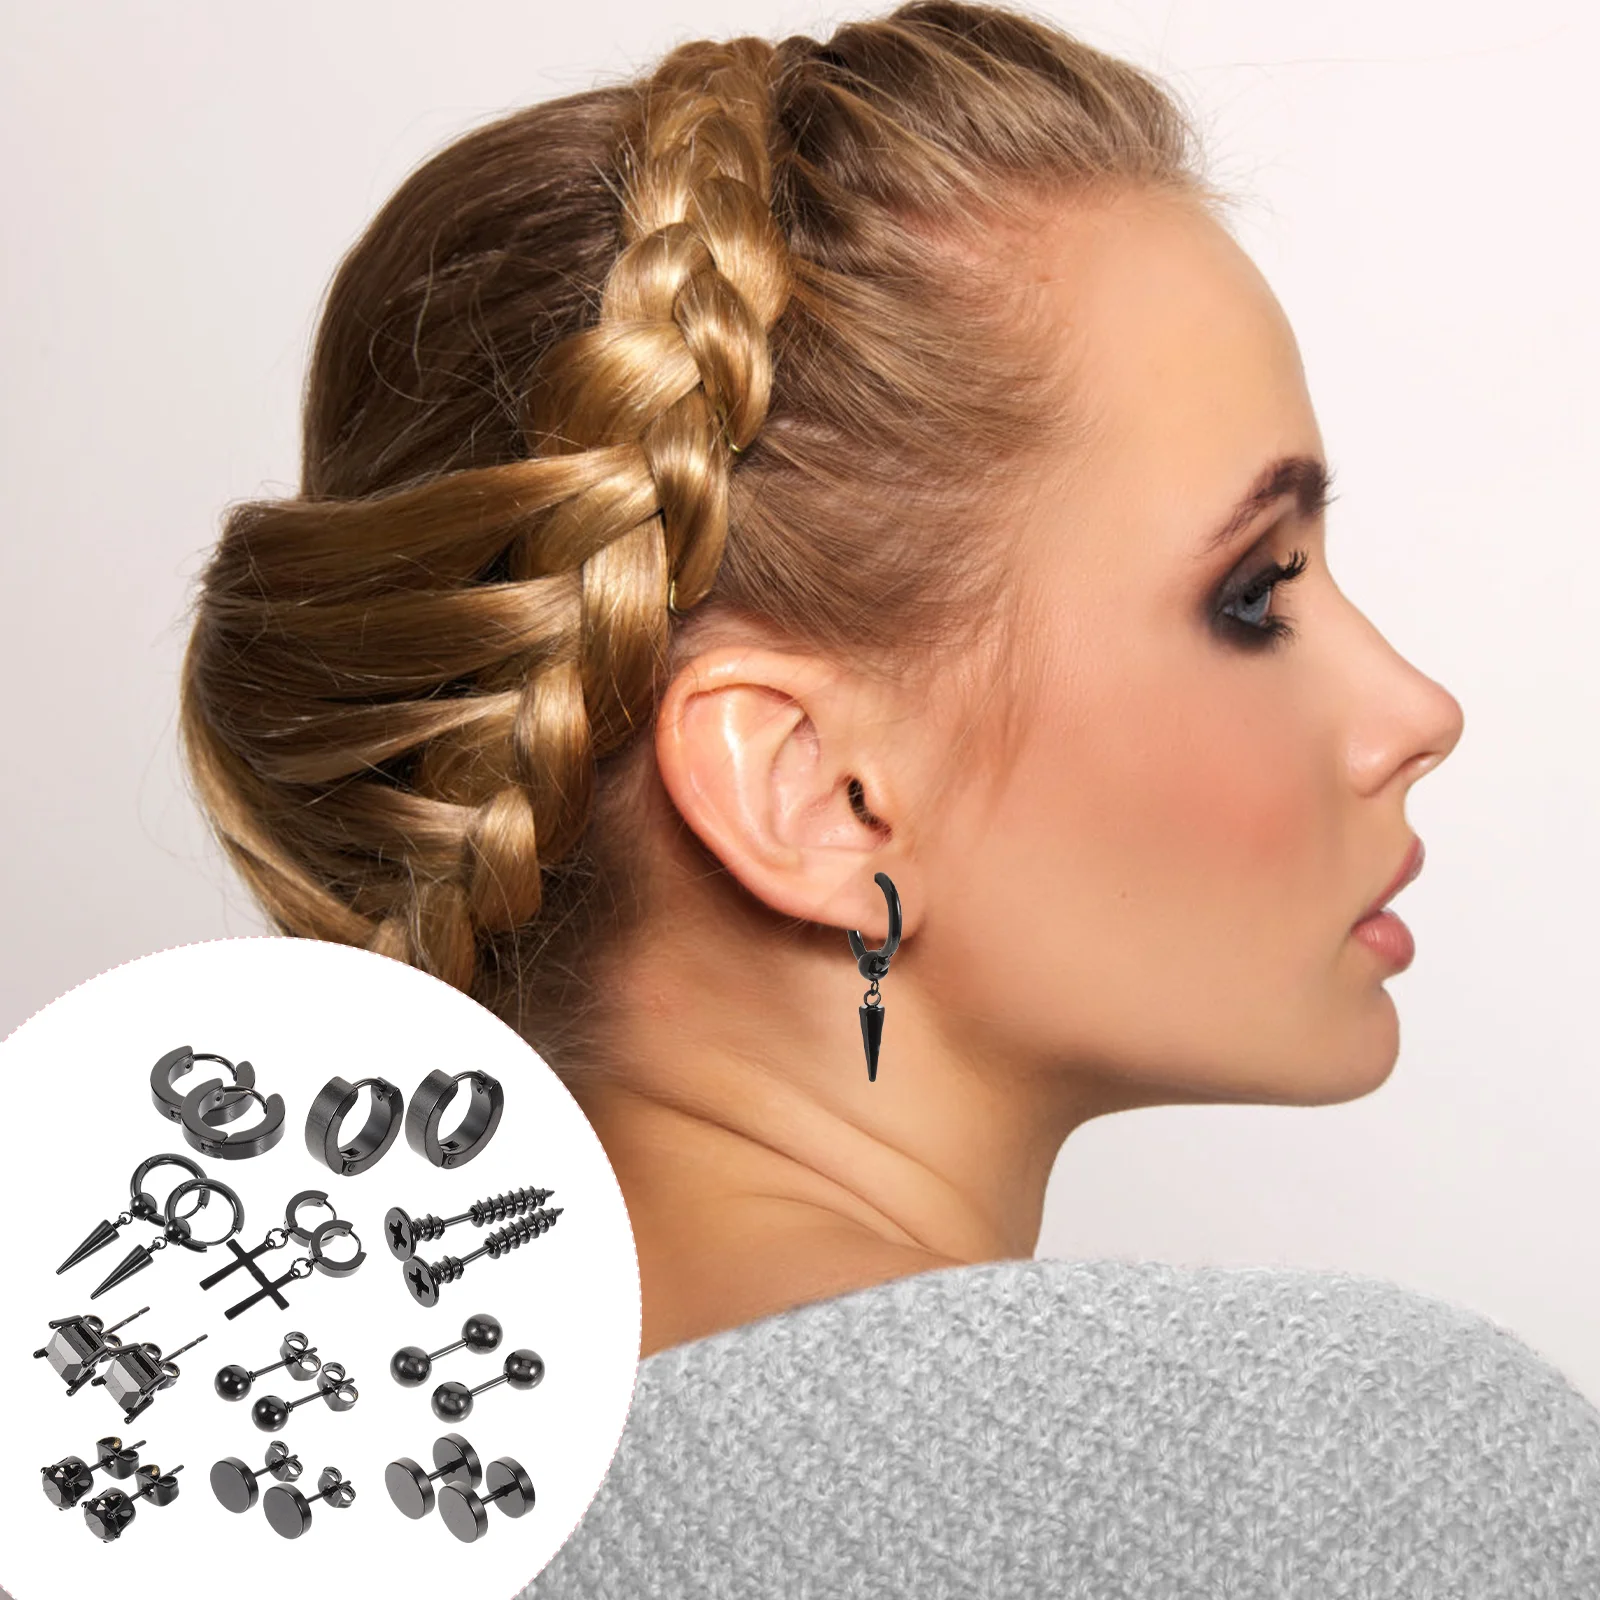 

11 Pairs Body Jewelries Ear Studs Nose Hoops Small Hoop Earrings for Women Girls